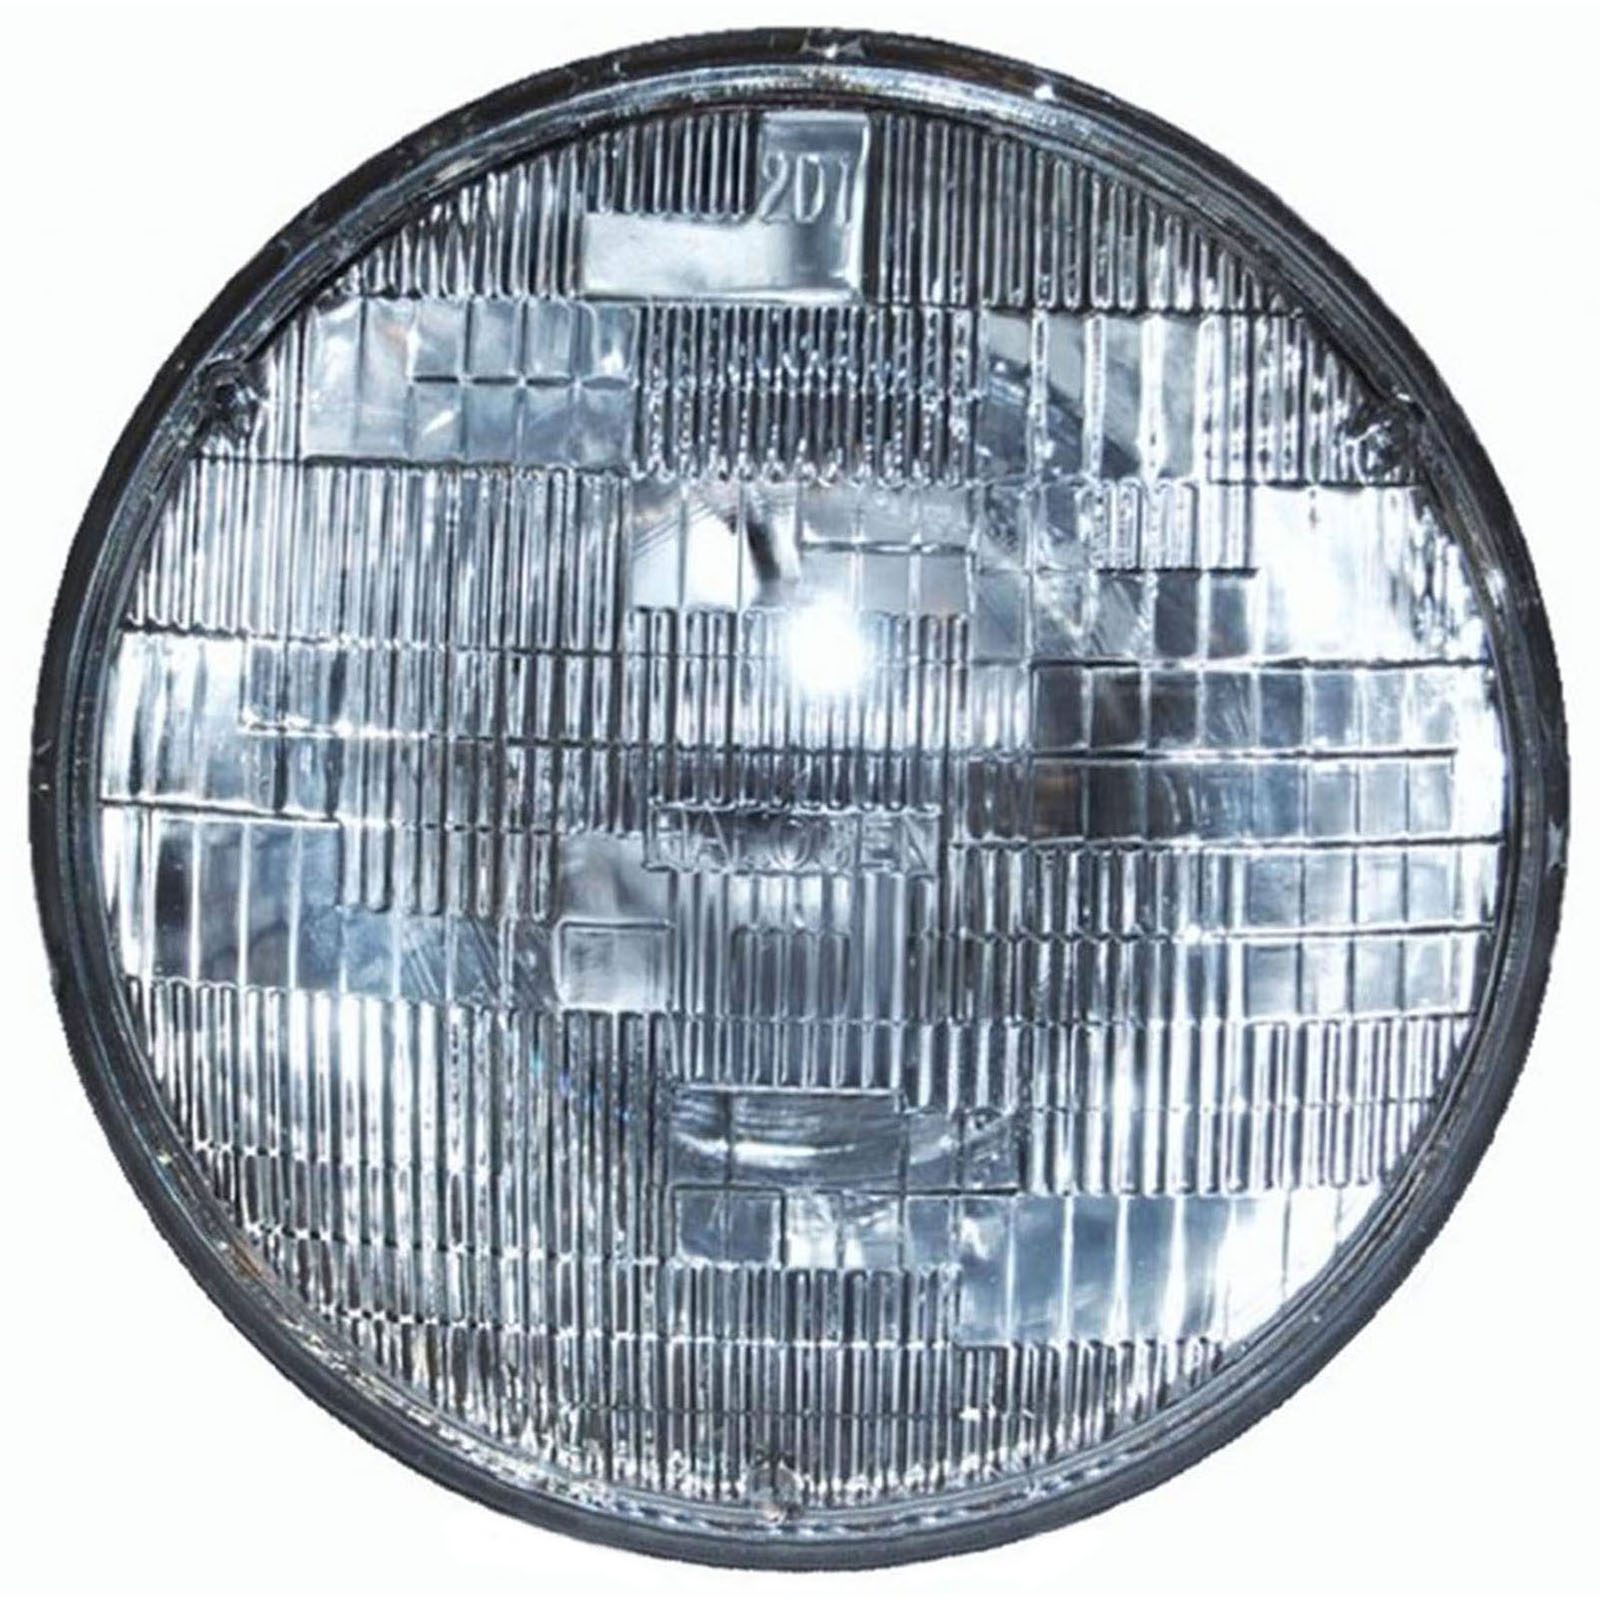 7 Round Halogen Sealed Beam Glass Headlight Head Lamp Light Bulb 12v New Ebay